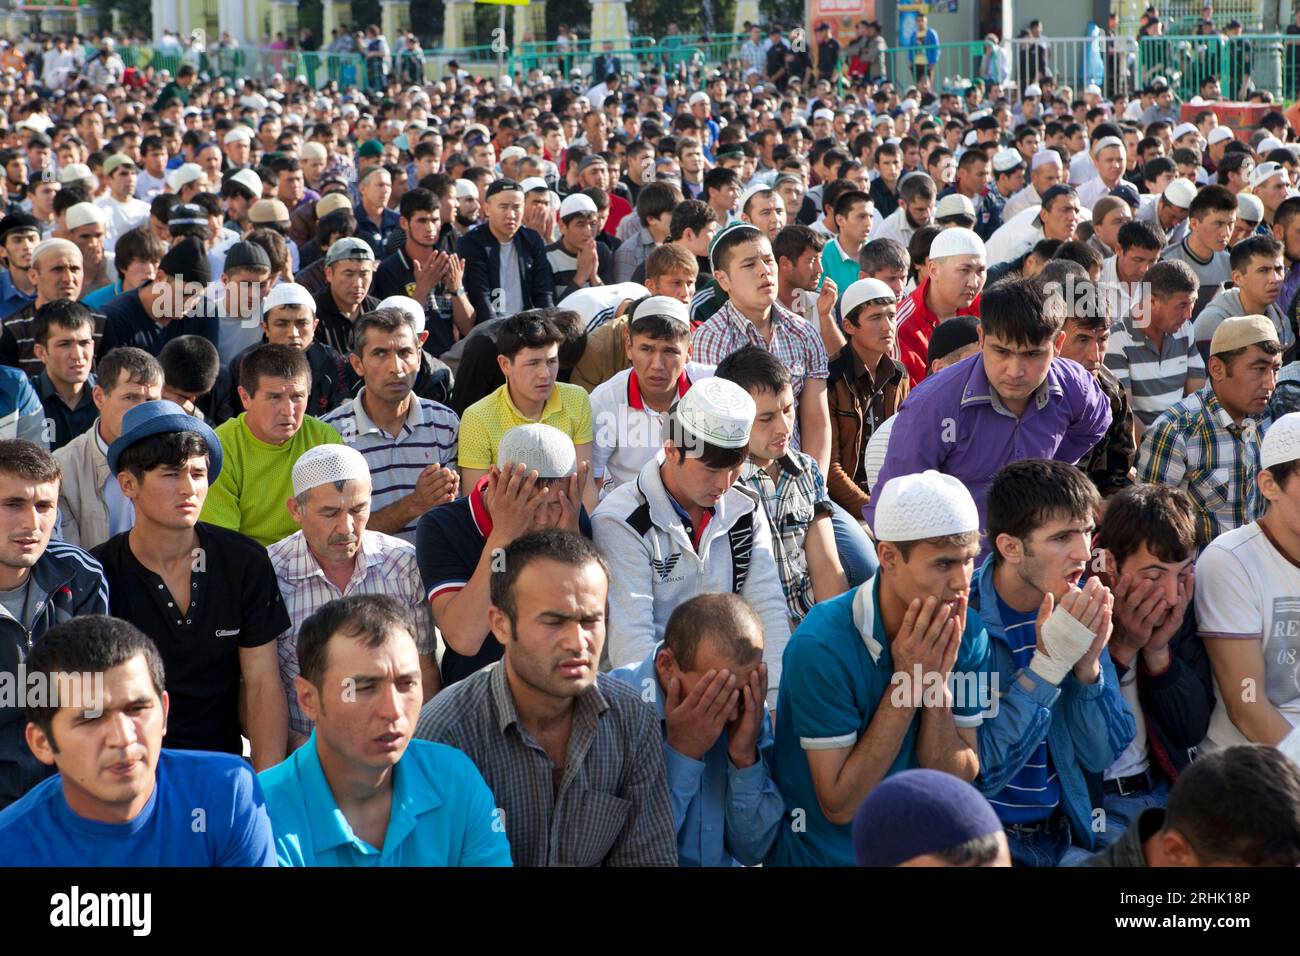 Les musulmans marquent l'Aïd al-Fitr à la fin du Ramadan à Moscou, en Russie. Banque D'Images